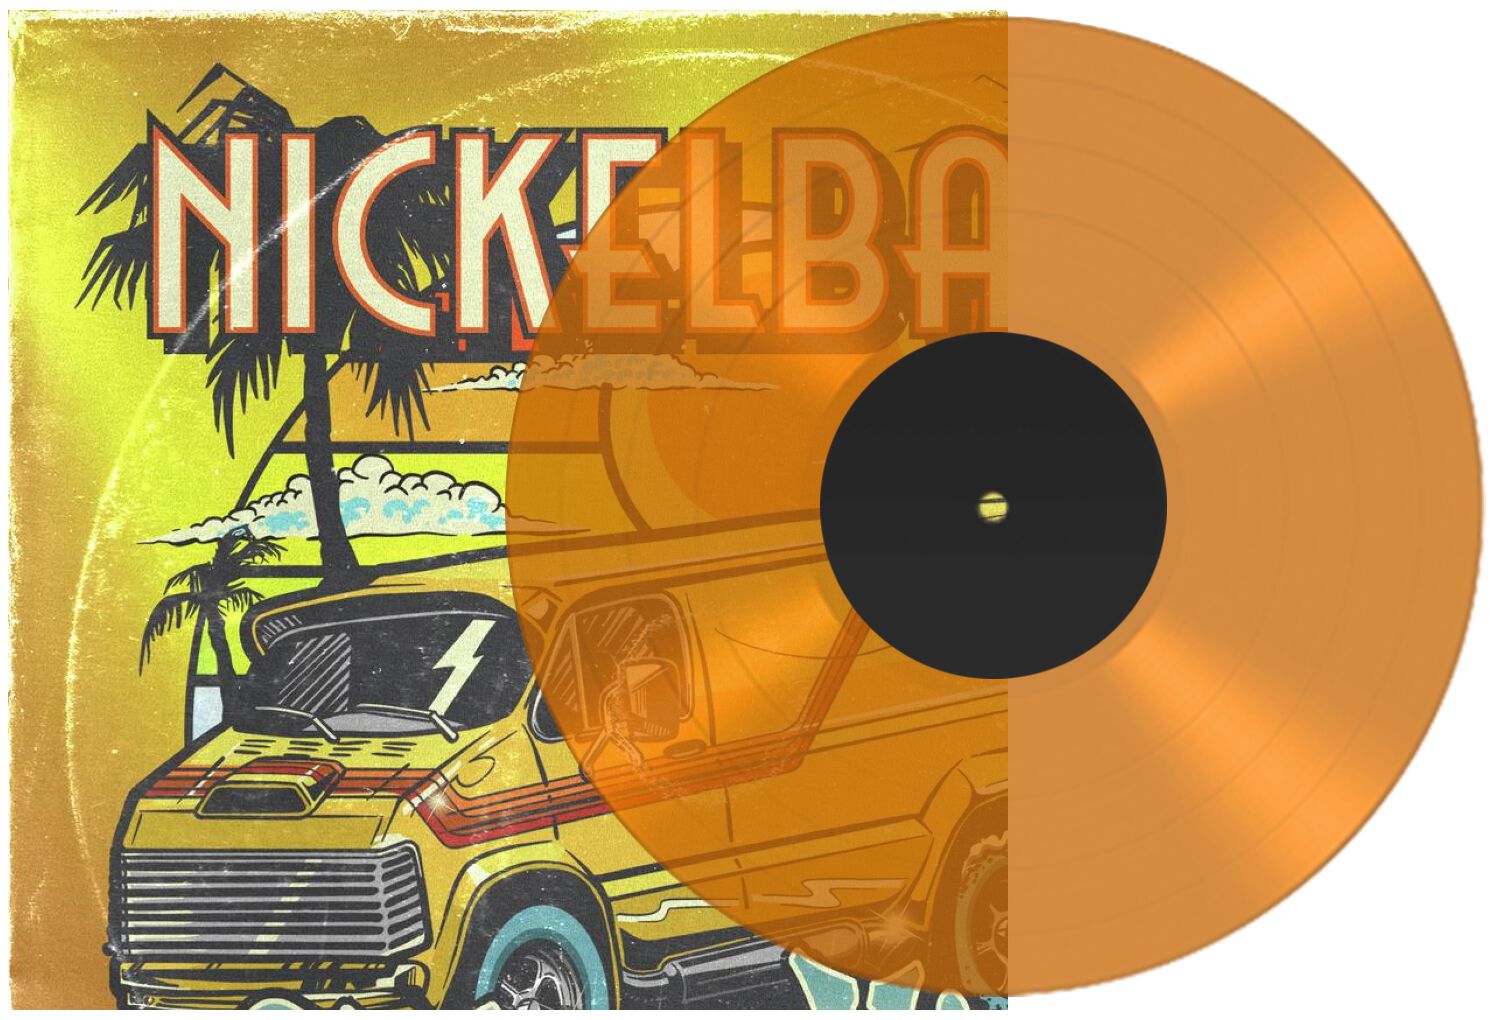 Nickelback Get rollin' LP coloured